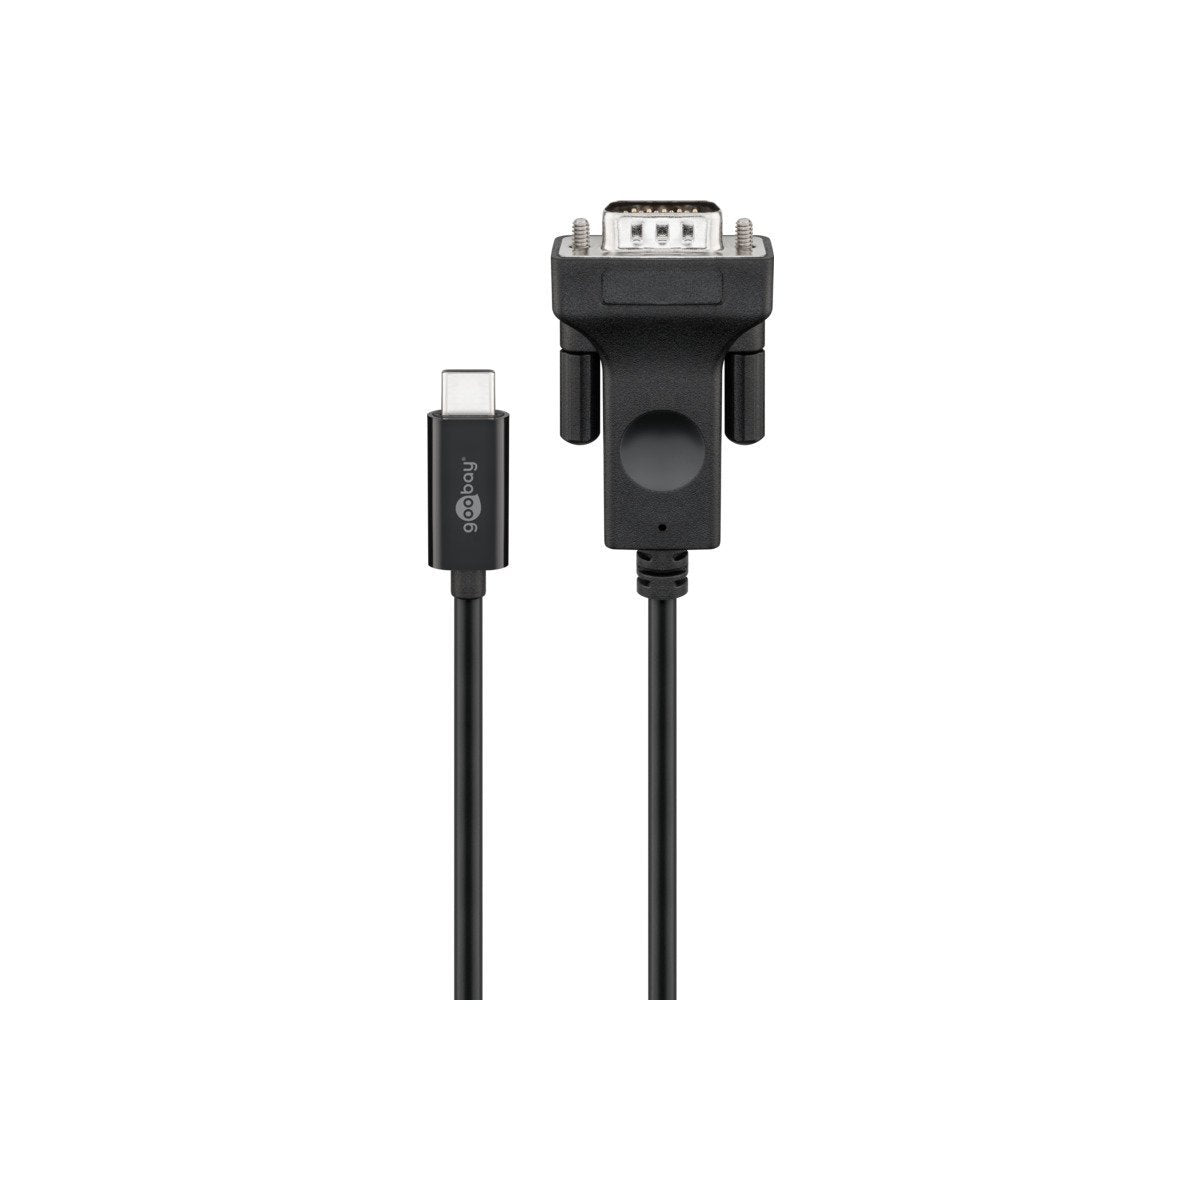 Goobay USB-C VGA adapt cable (1080p 60 Hz) black 1.80m - Cables - Techunion -